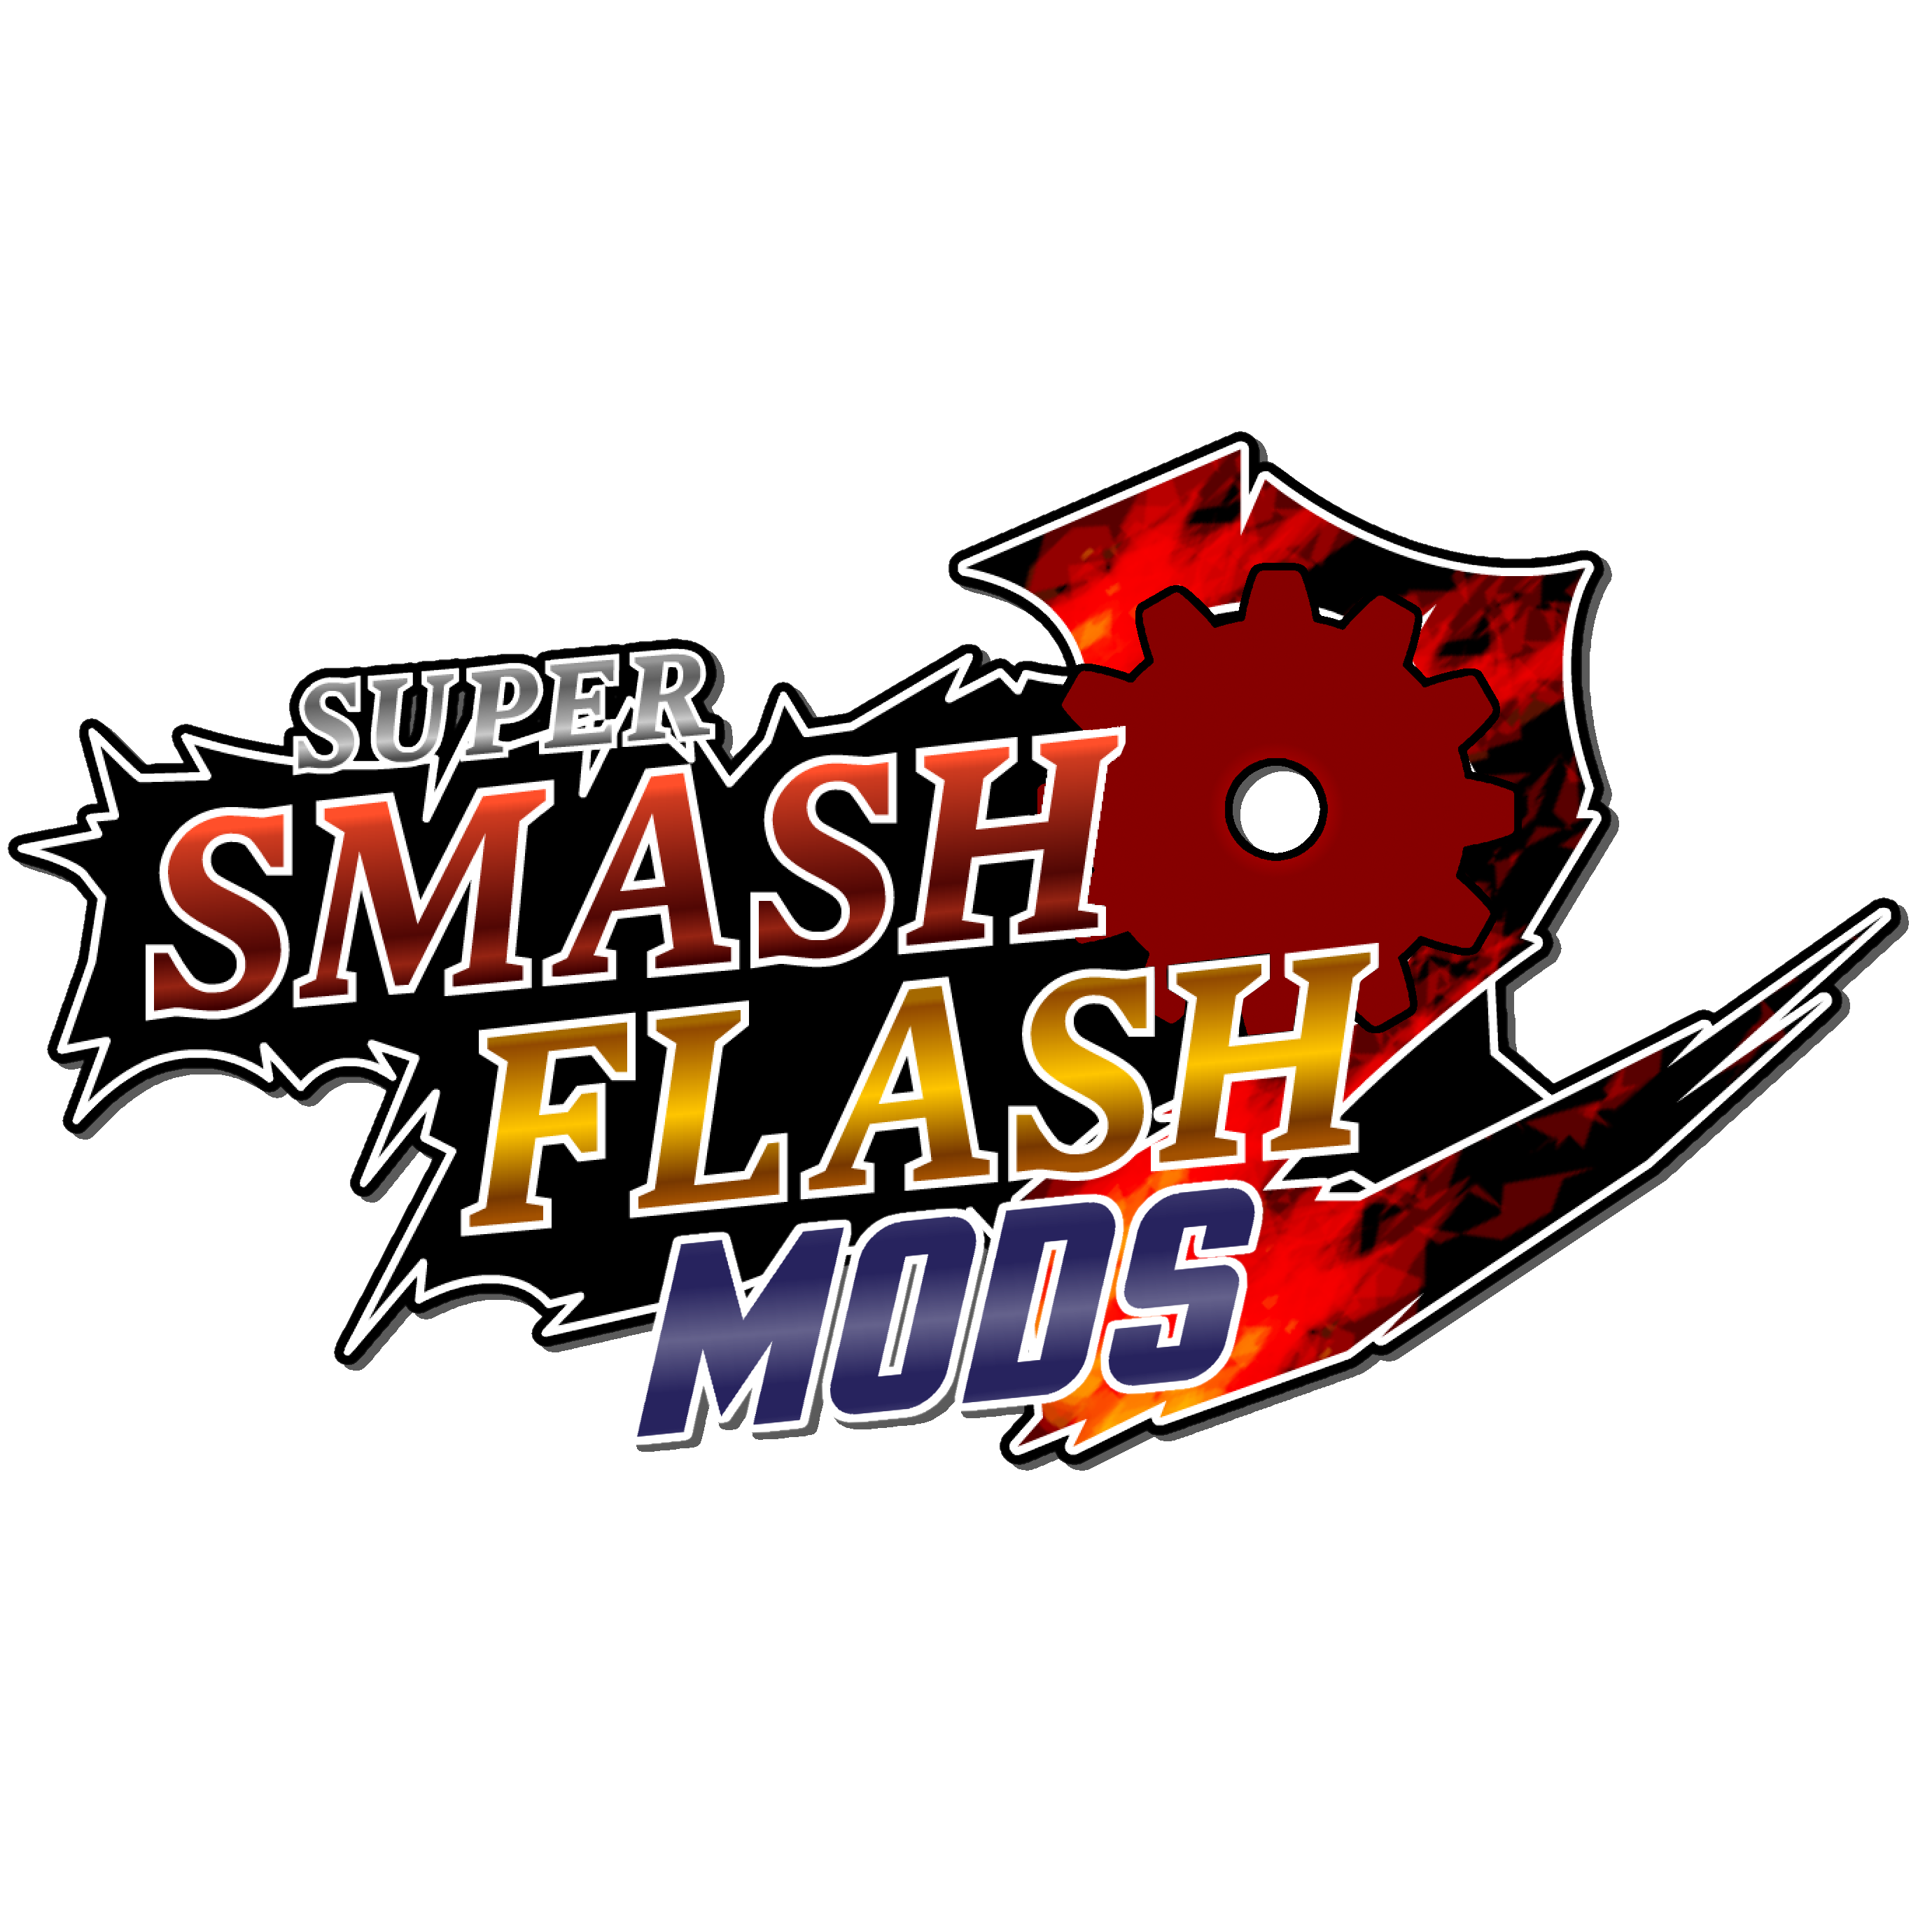 Super smash flash 2 save data download pc